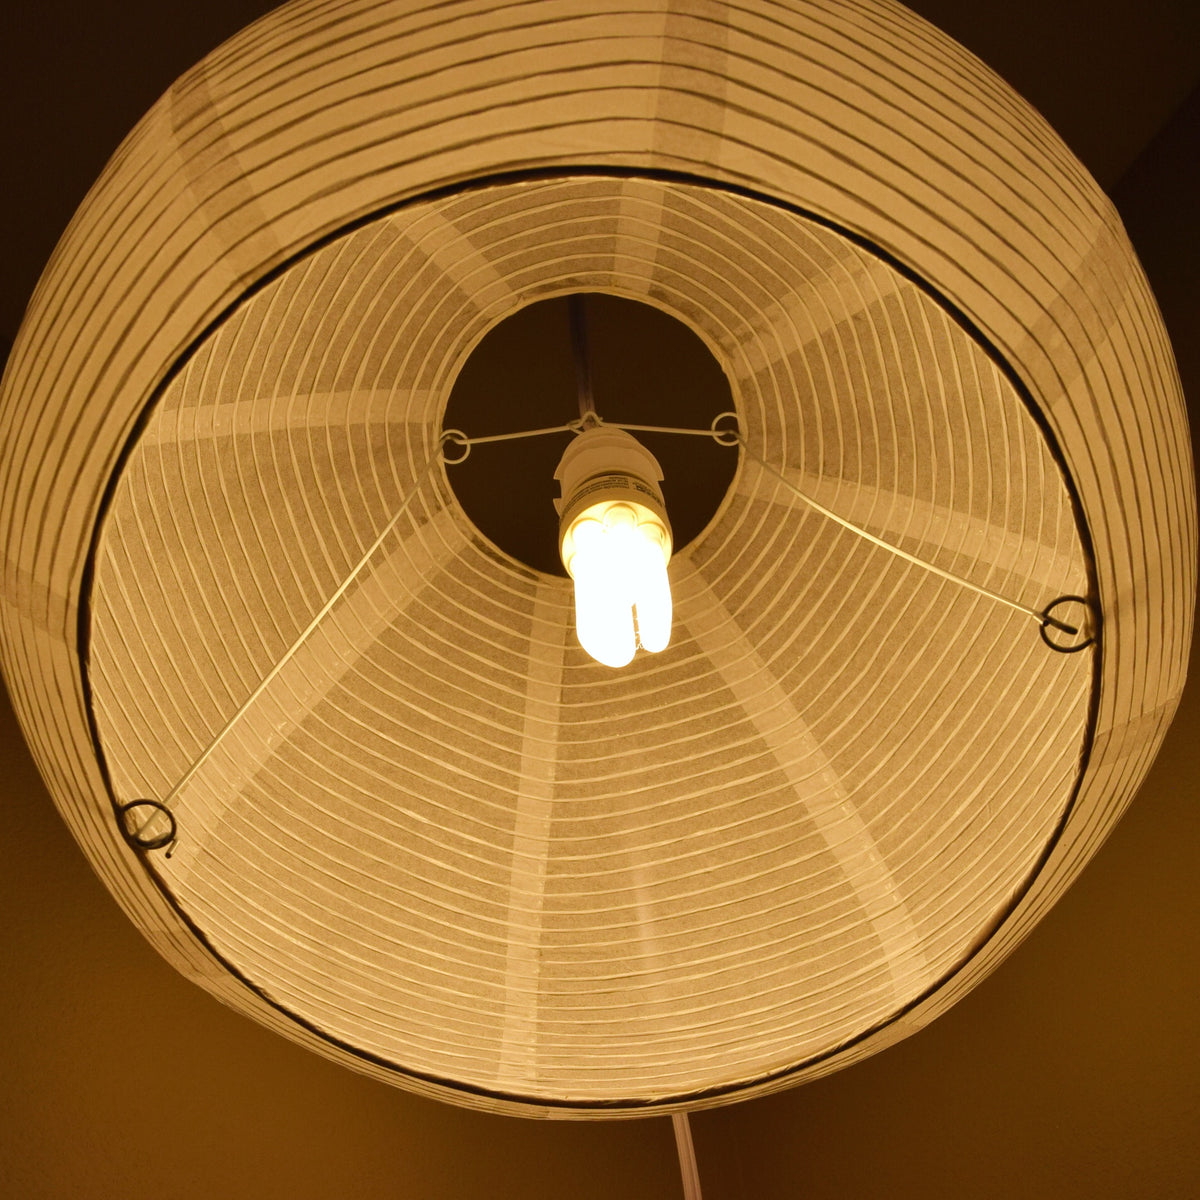 Spherical Dome Shaped Premium Fine Line Paper Lantern Lampshade, White (16&quot;W x 12&quot;H)